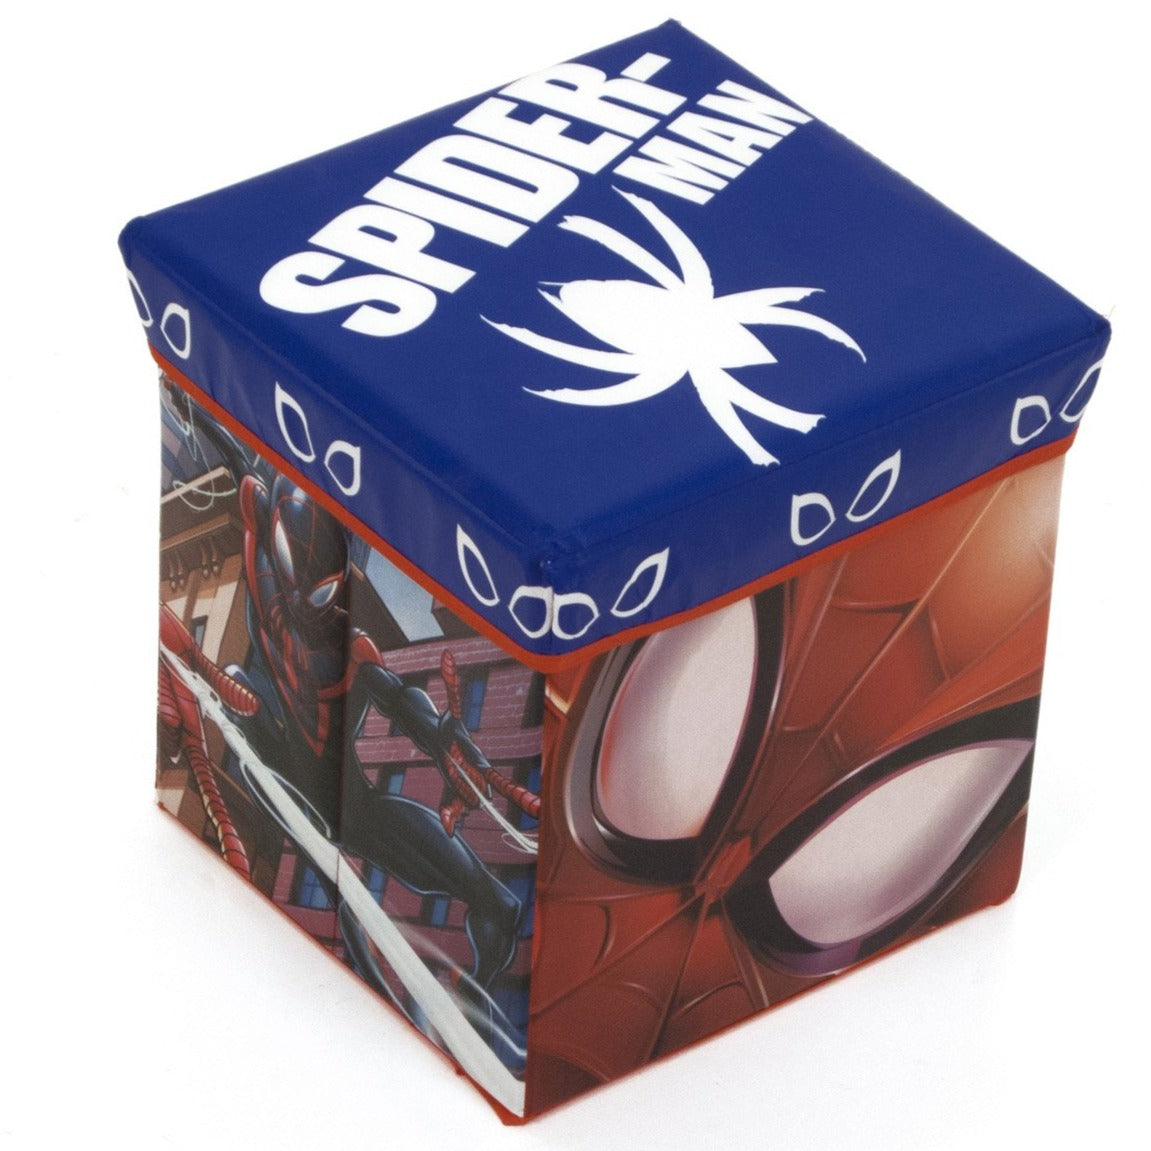 Spiderman Fabric Storage Bin With Stool